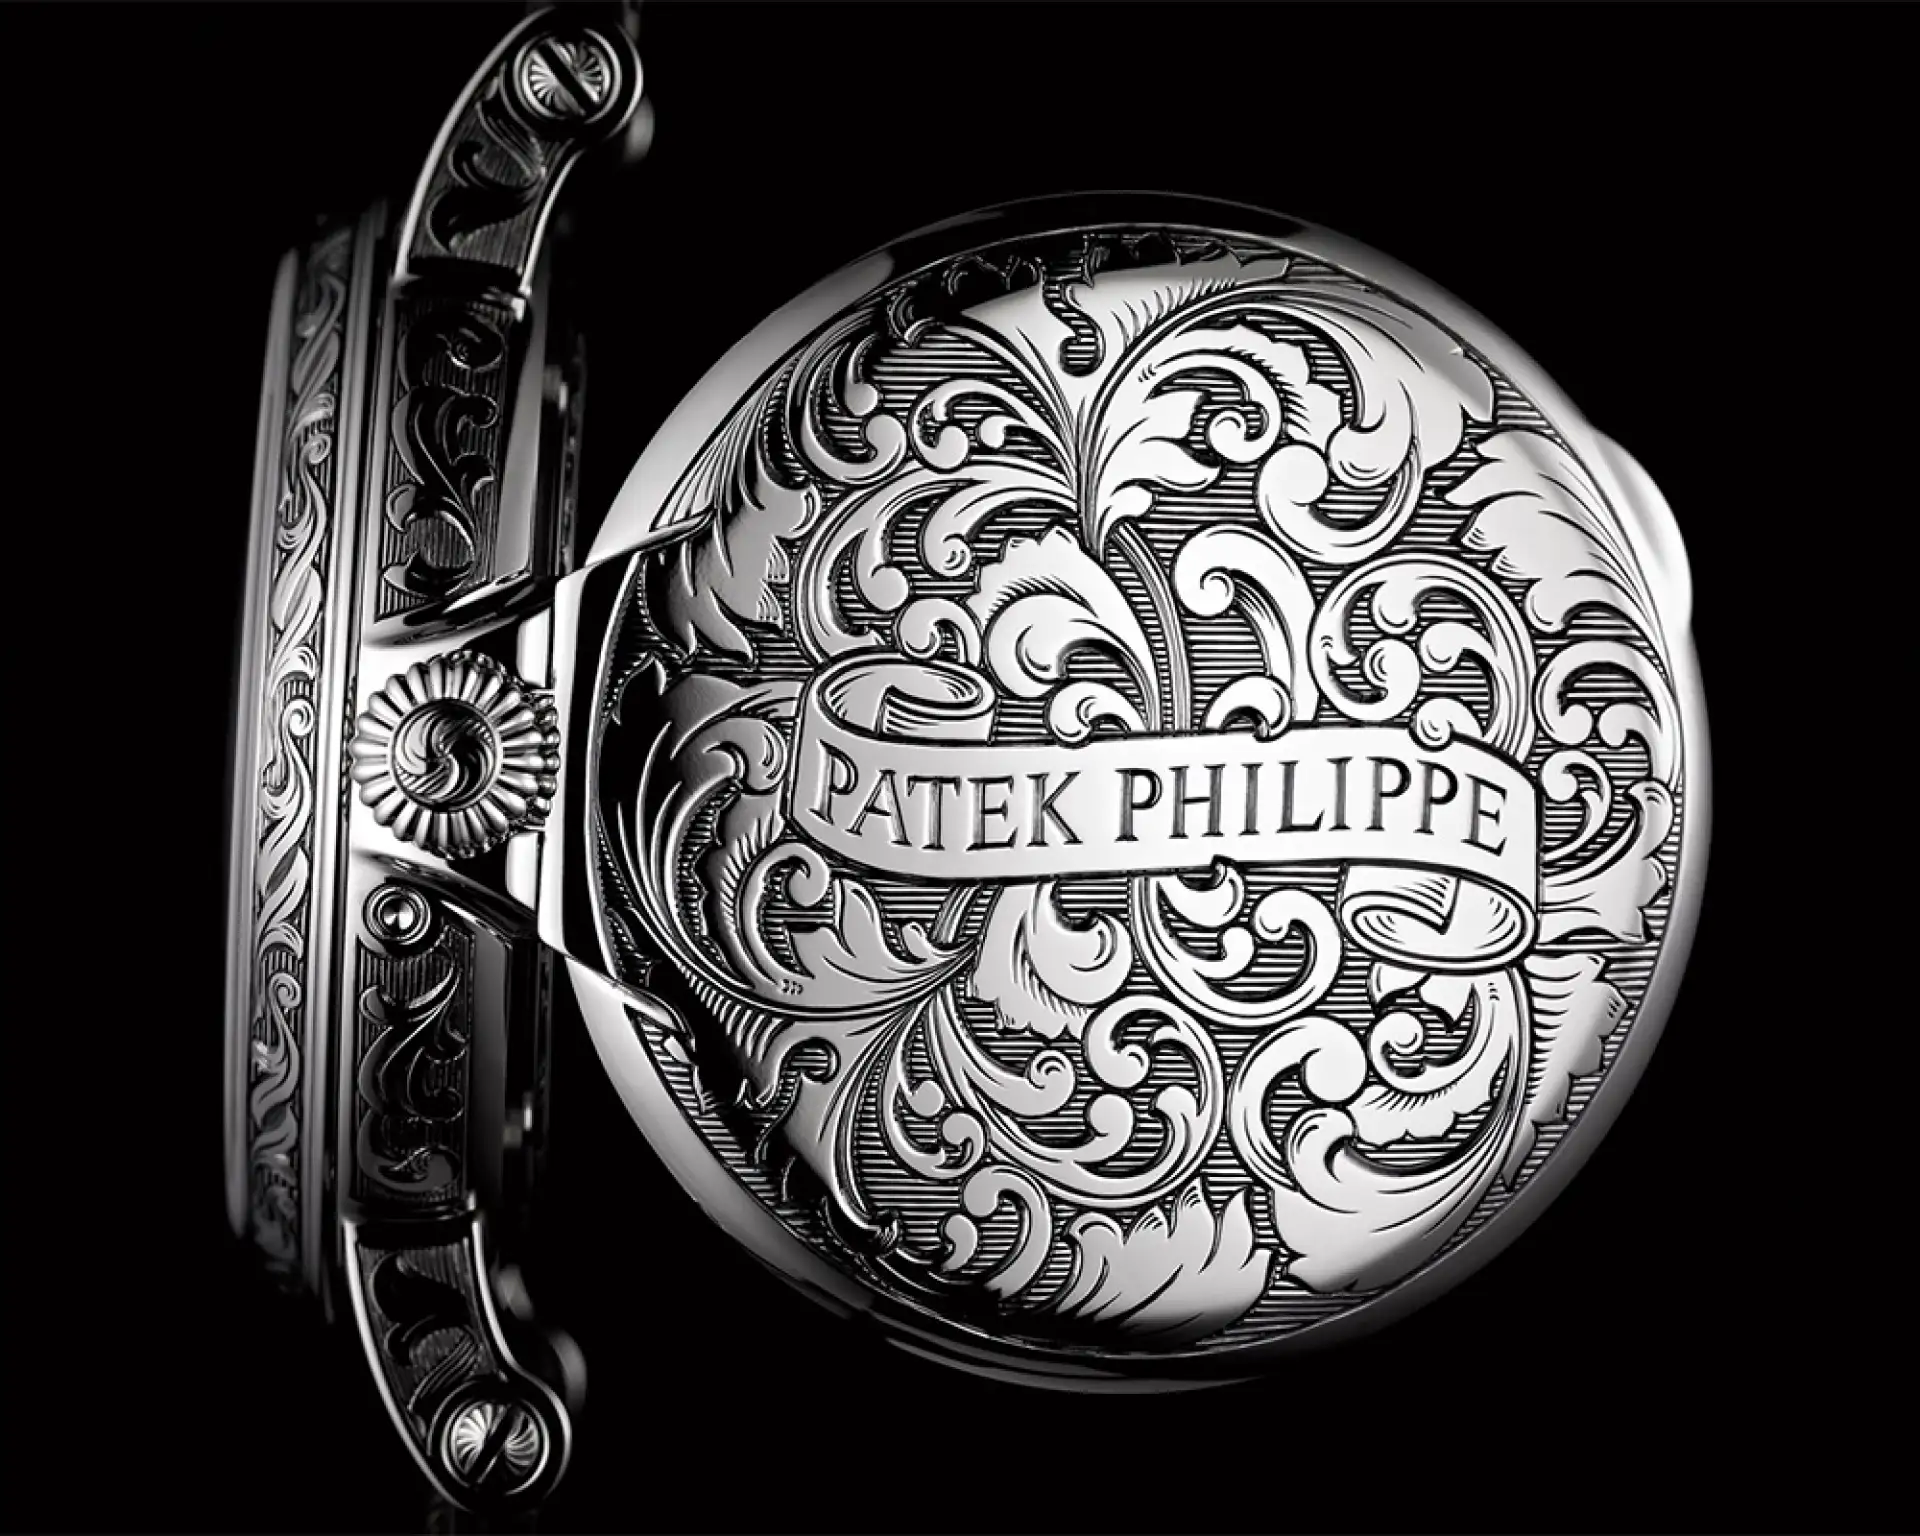 Patek Philippe 5160 500g 001 At Cortina Watch Caseback Close Up